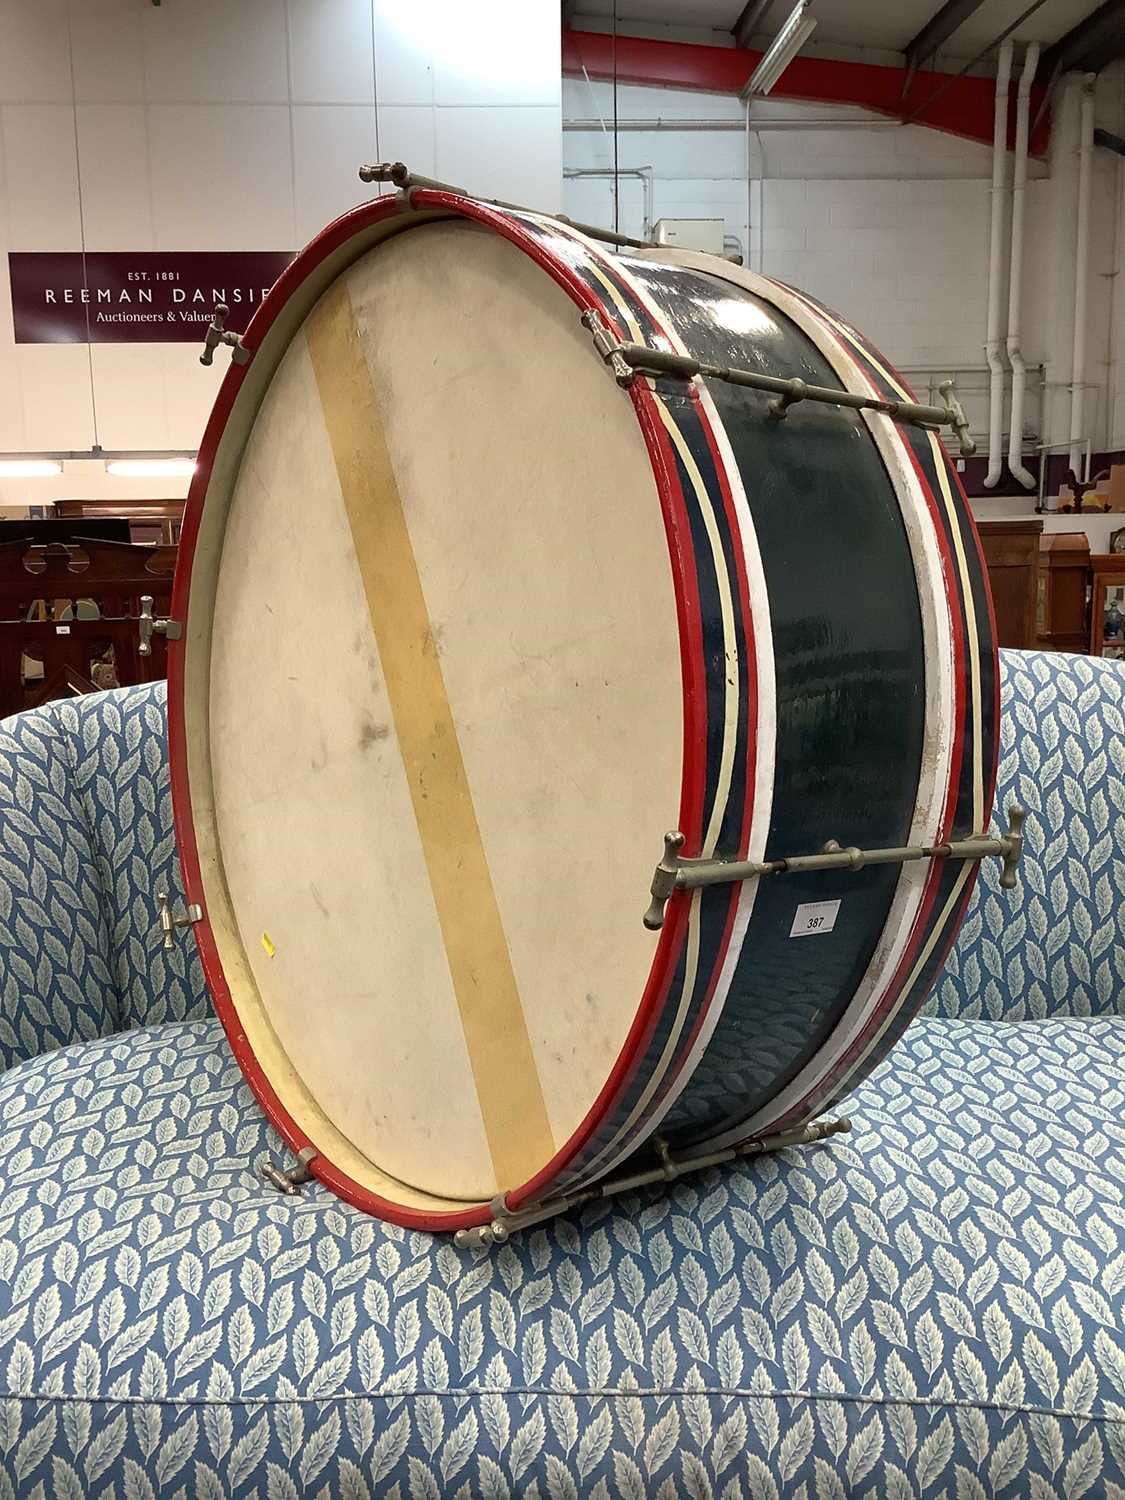 Vintage painted bass drum